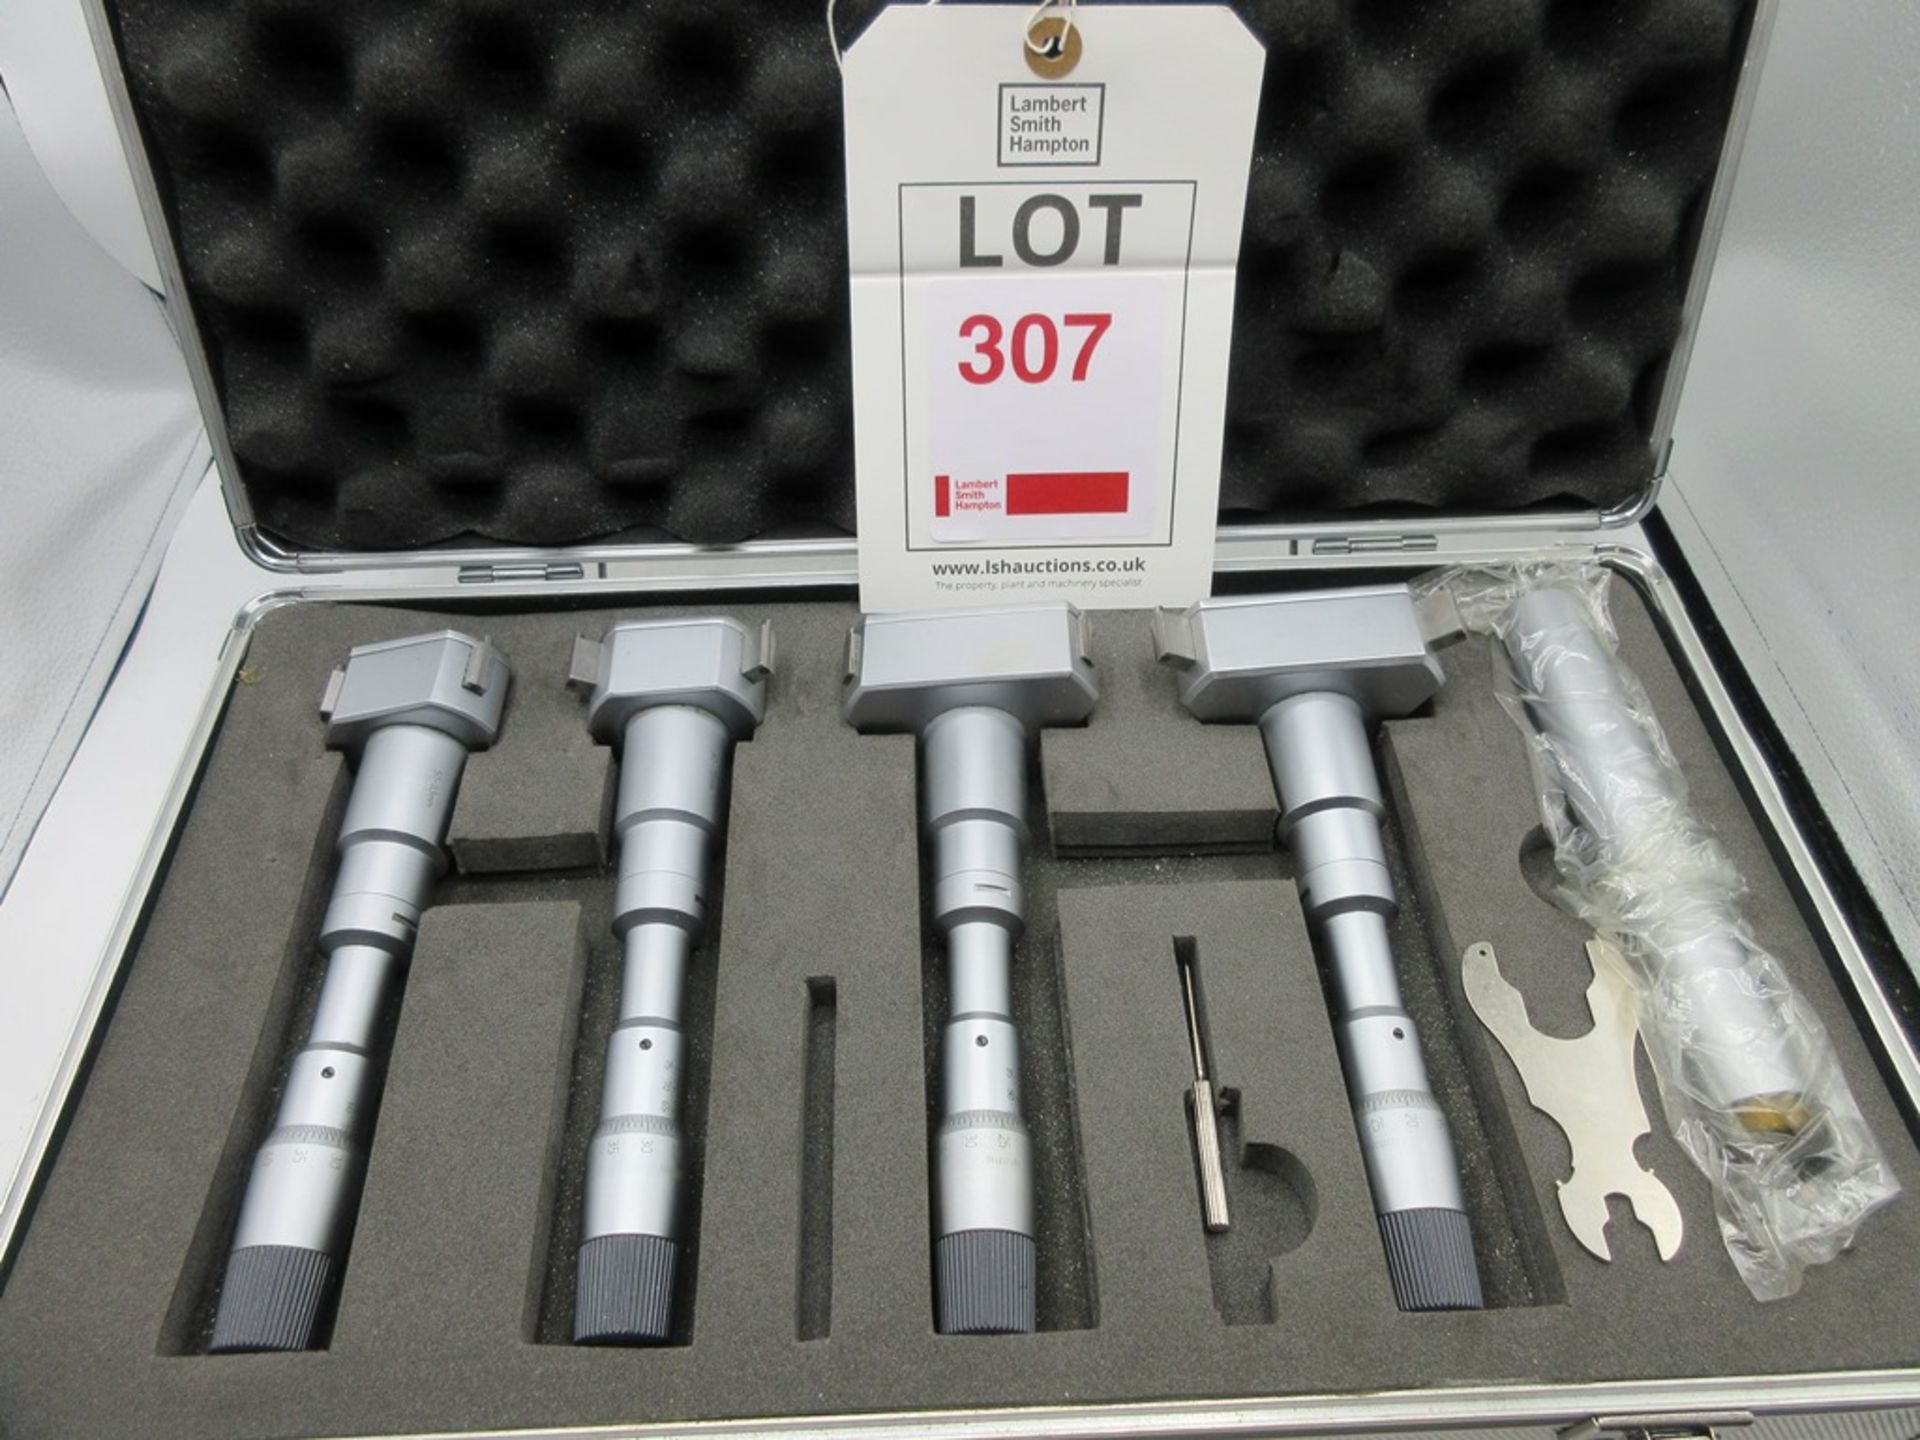 3 point internal micrometer set